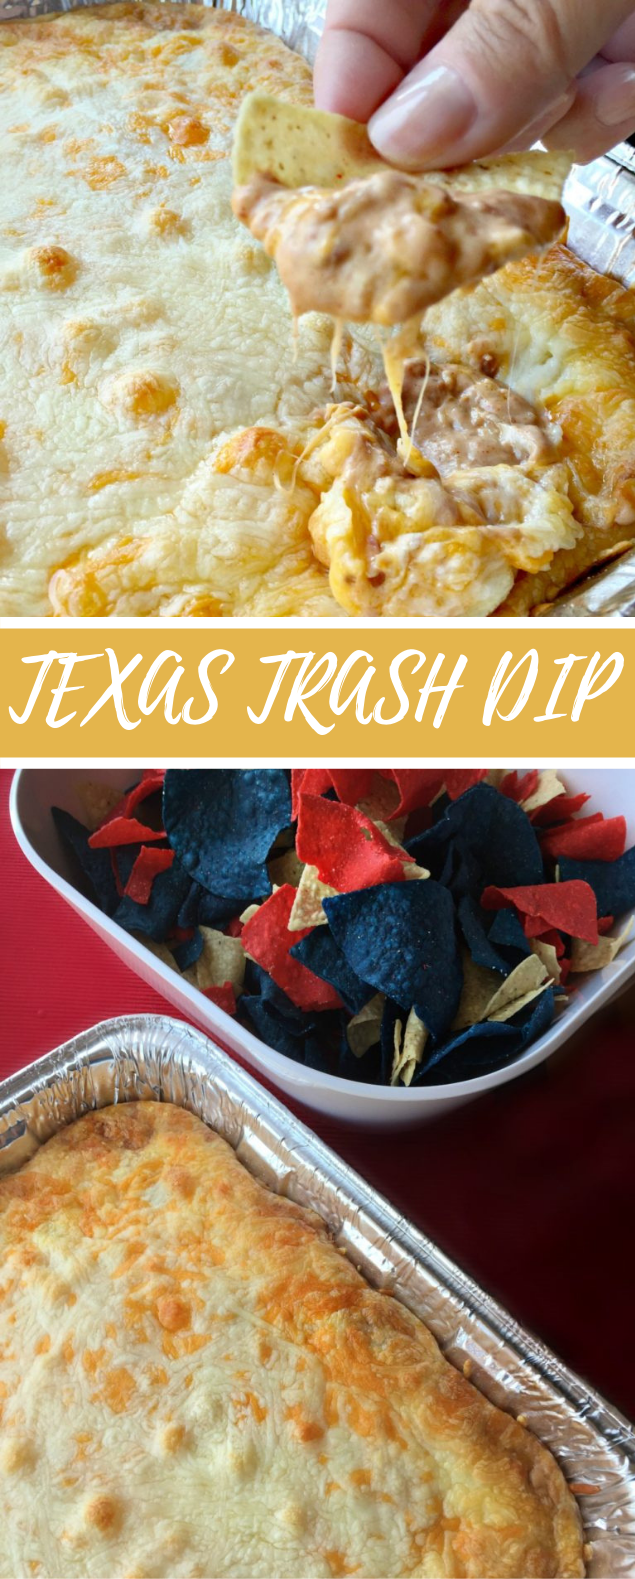 TEXAS TRASH DIP (WARM BEAN DIP) #appetizers #lunch #dip #texasrecipe #meals